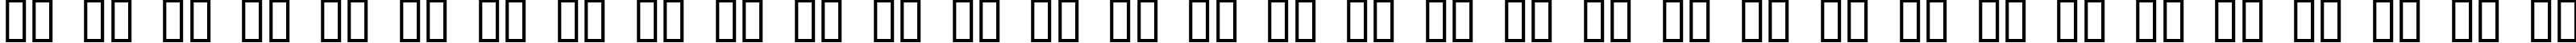 Пример написания русского алфавита шрифтом Polaroid 22